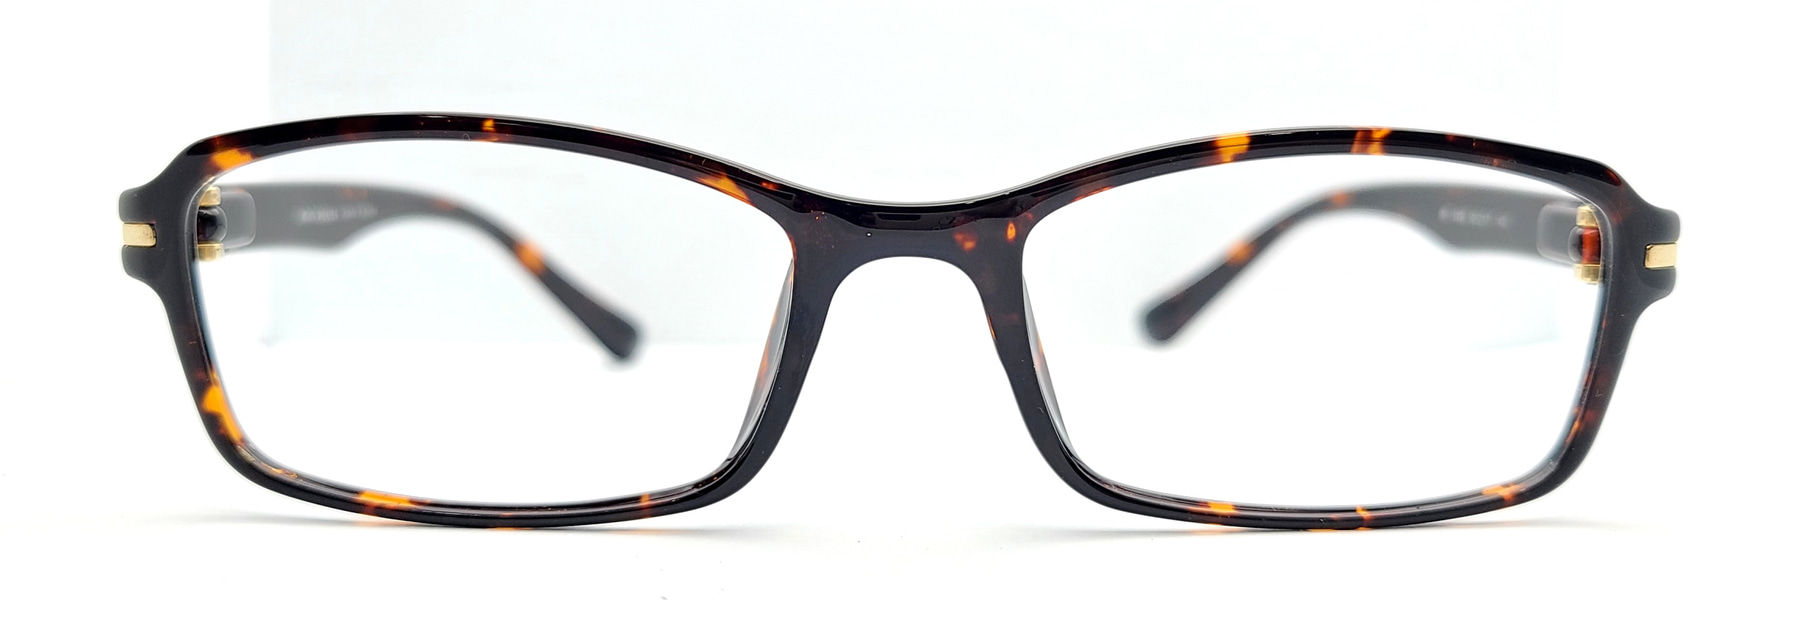 MINIHOUSE M-1095, Korean glasses, sunglasses, eyeglasses, glasses